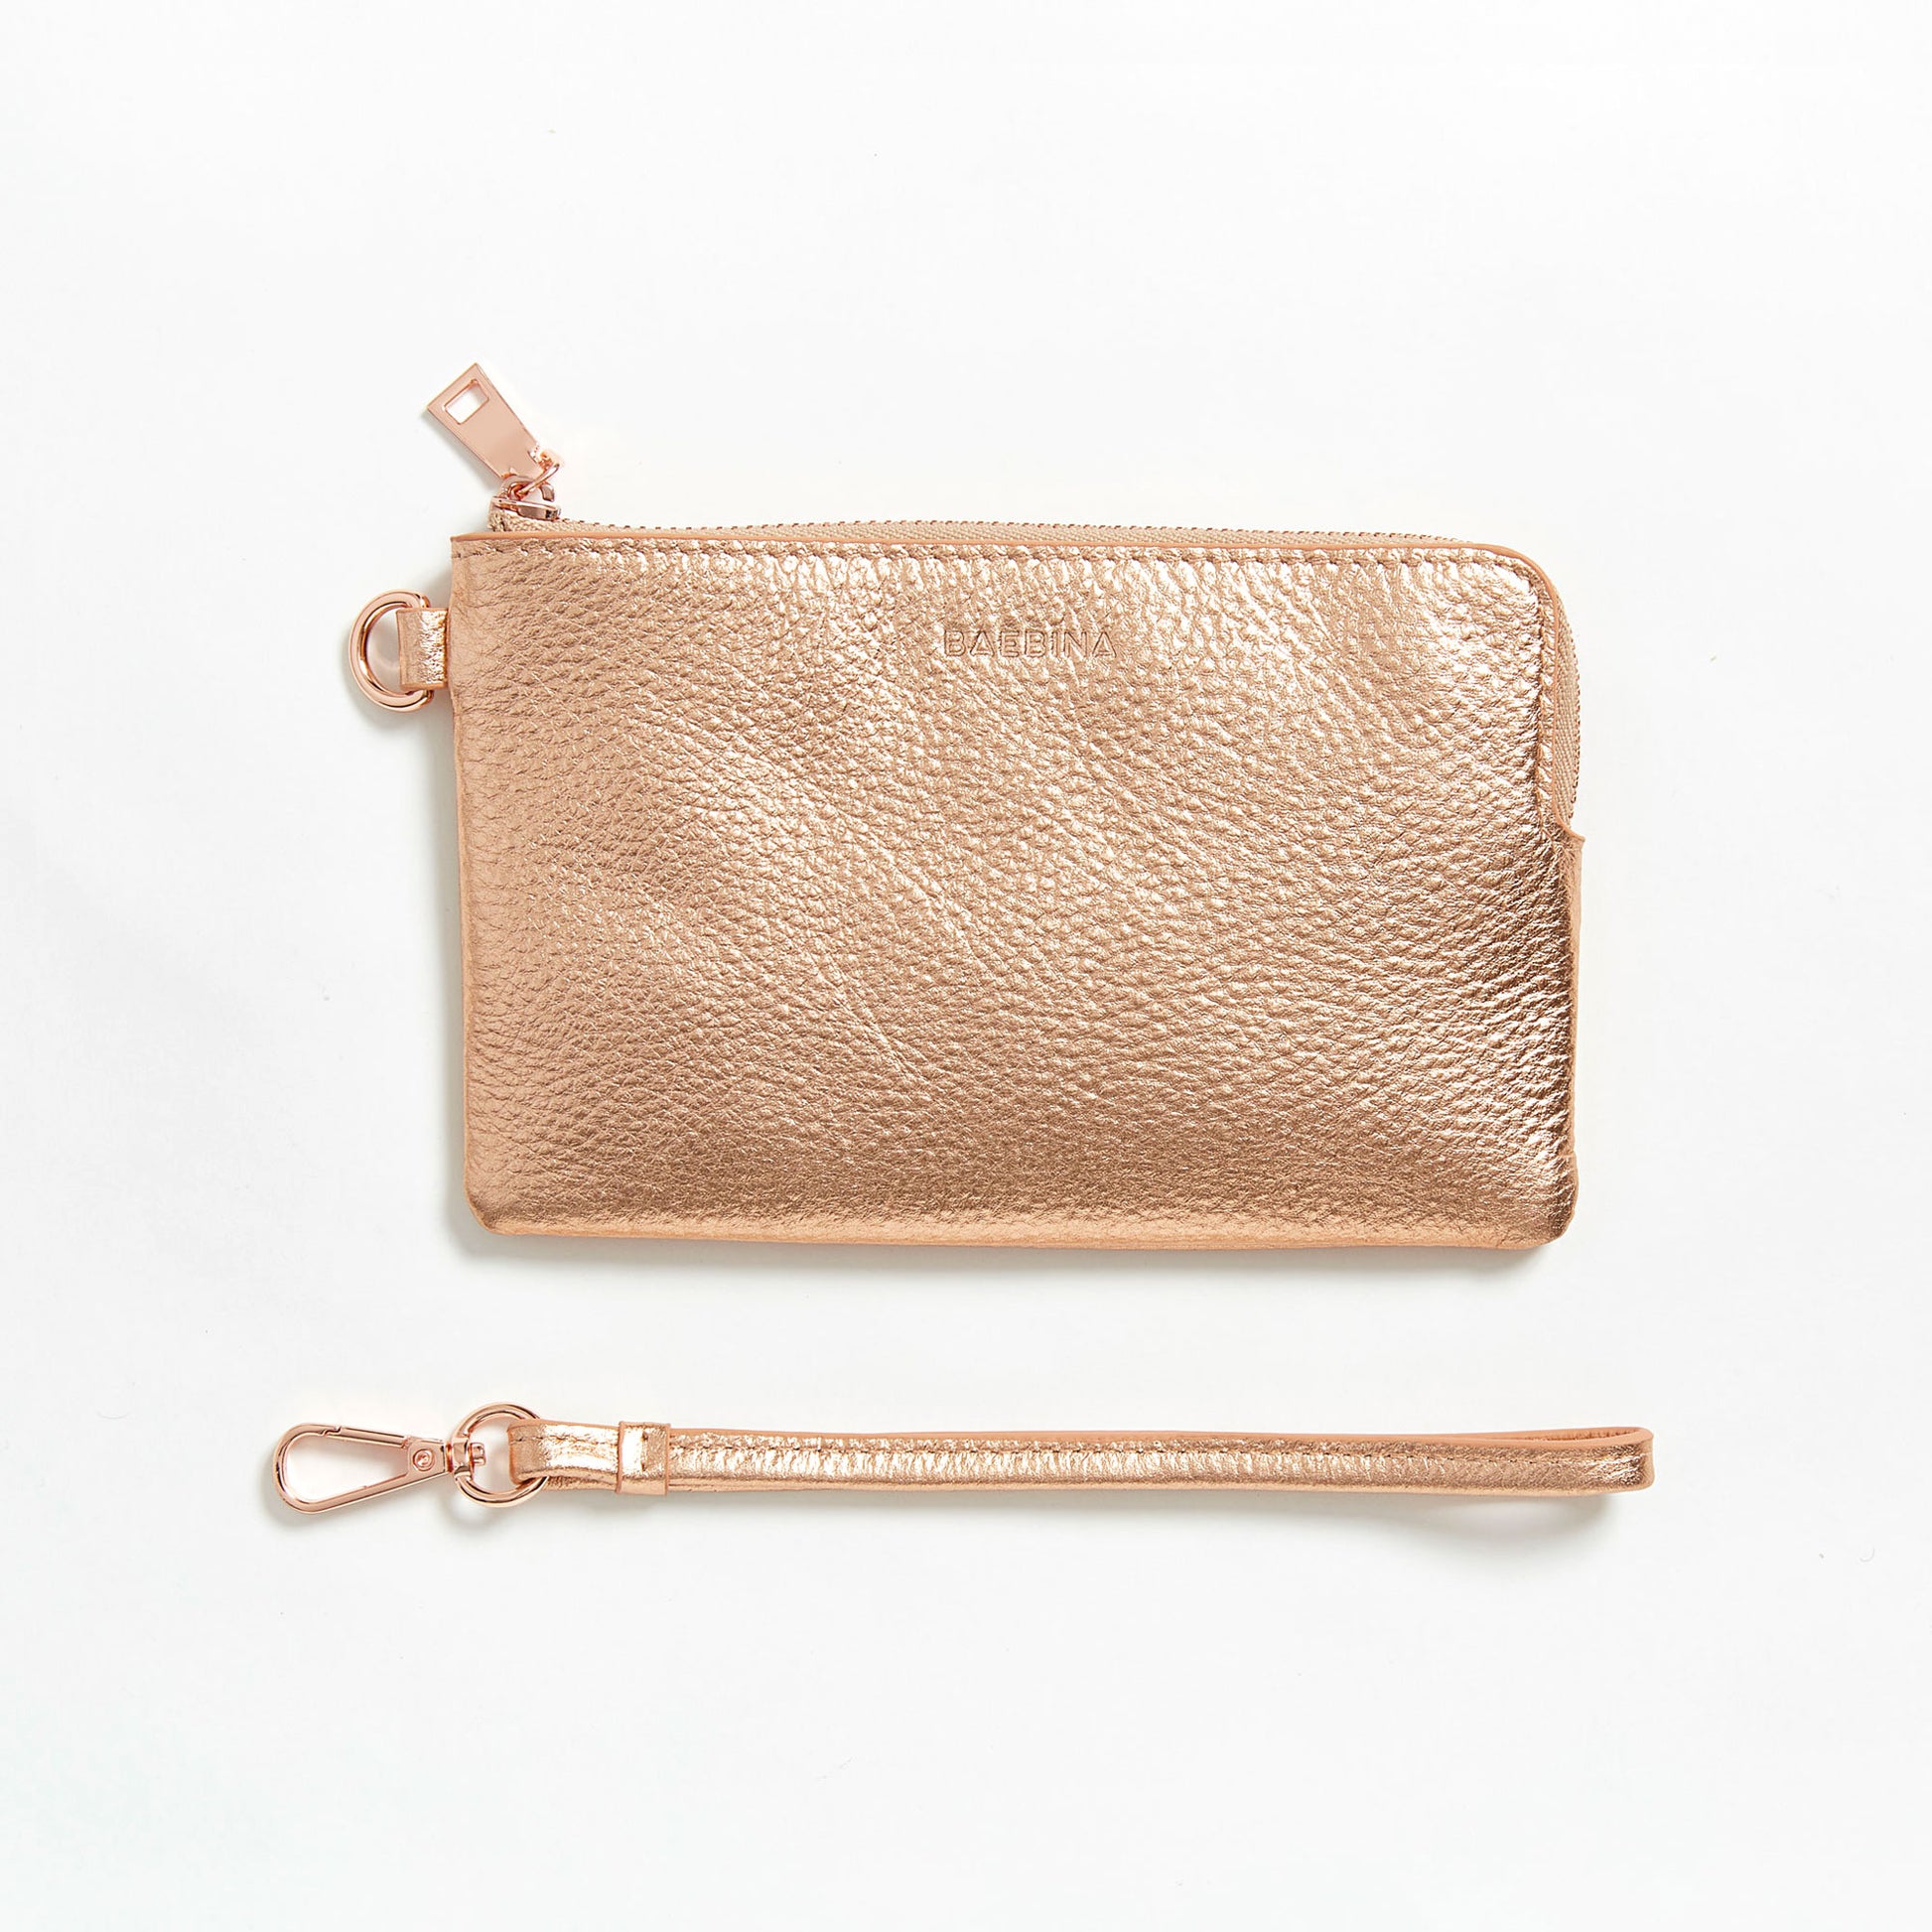 Baebina leather wristlet purse